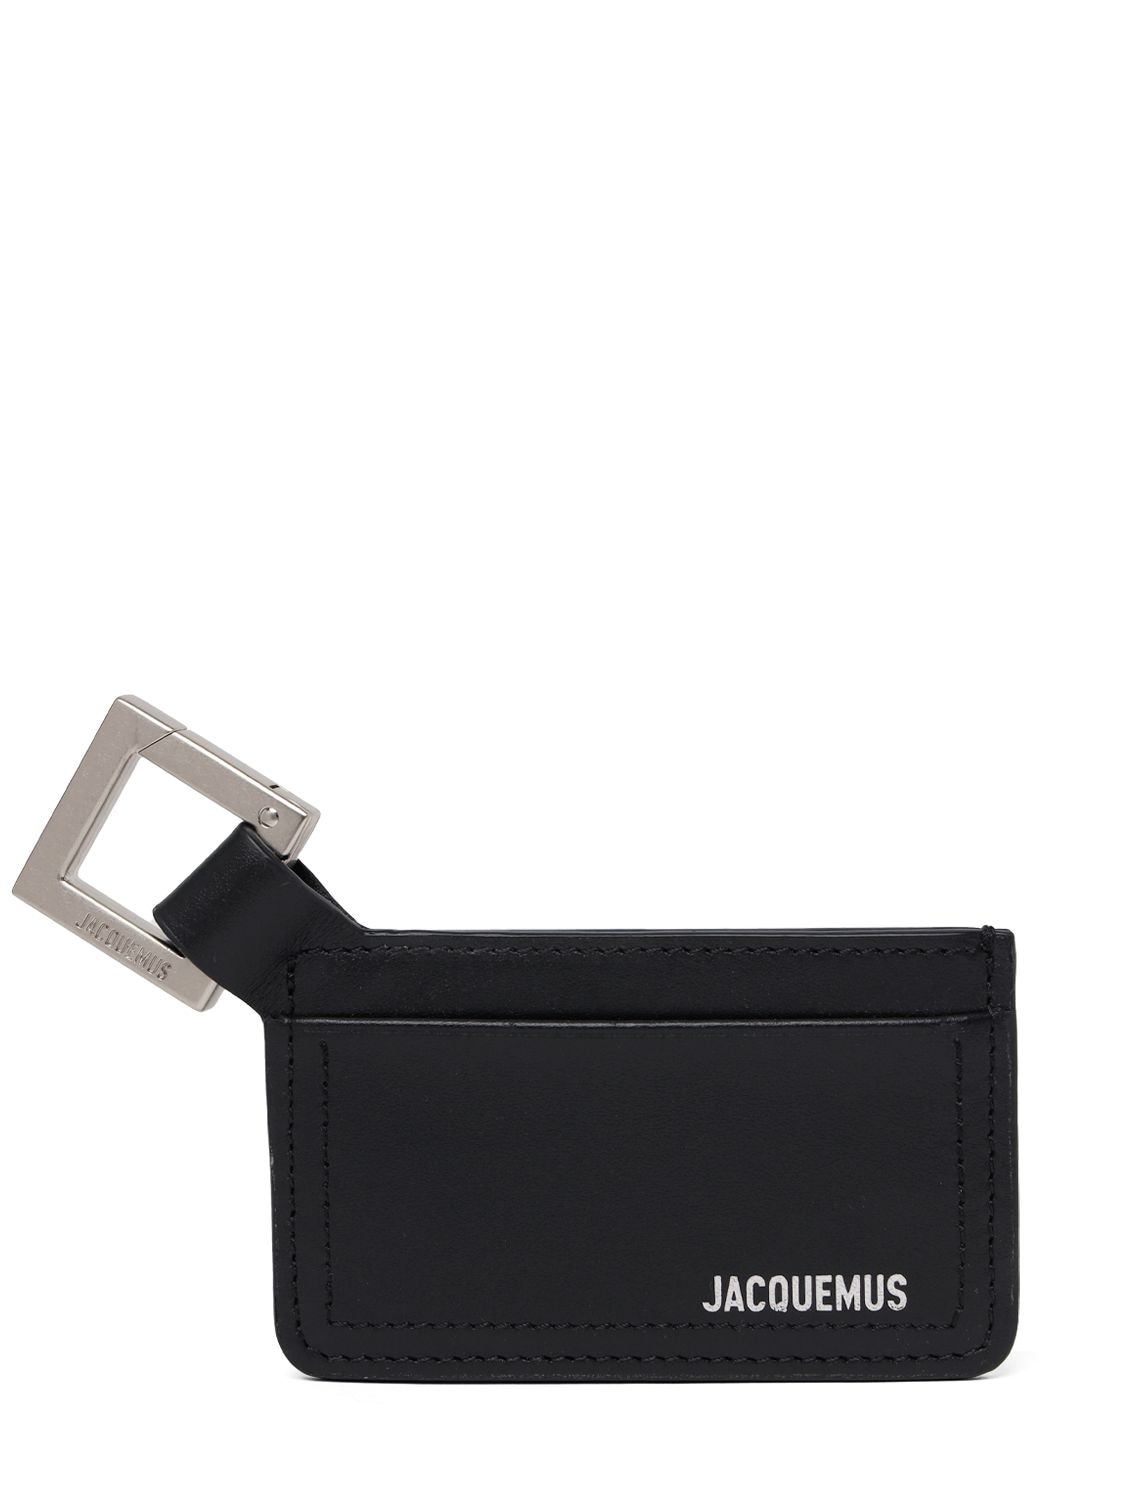 Jacquemus Le Porte-cartes Cuerda Leather Wallet In Black